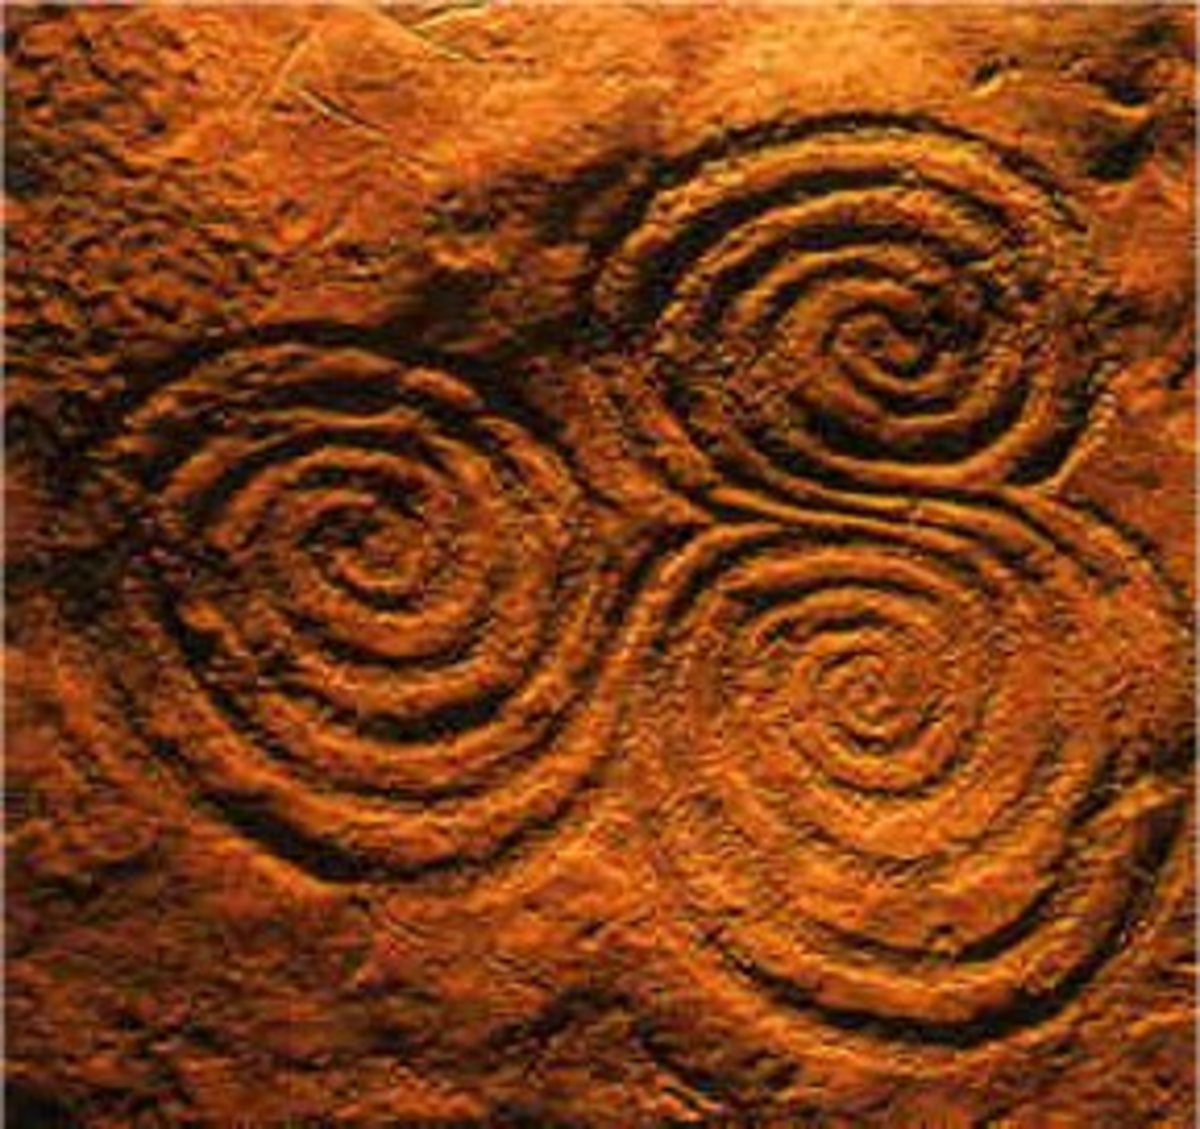 roslin-glen-ancient-rock-carvings